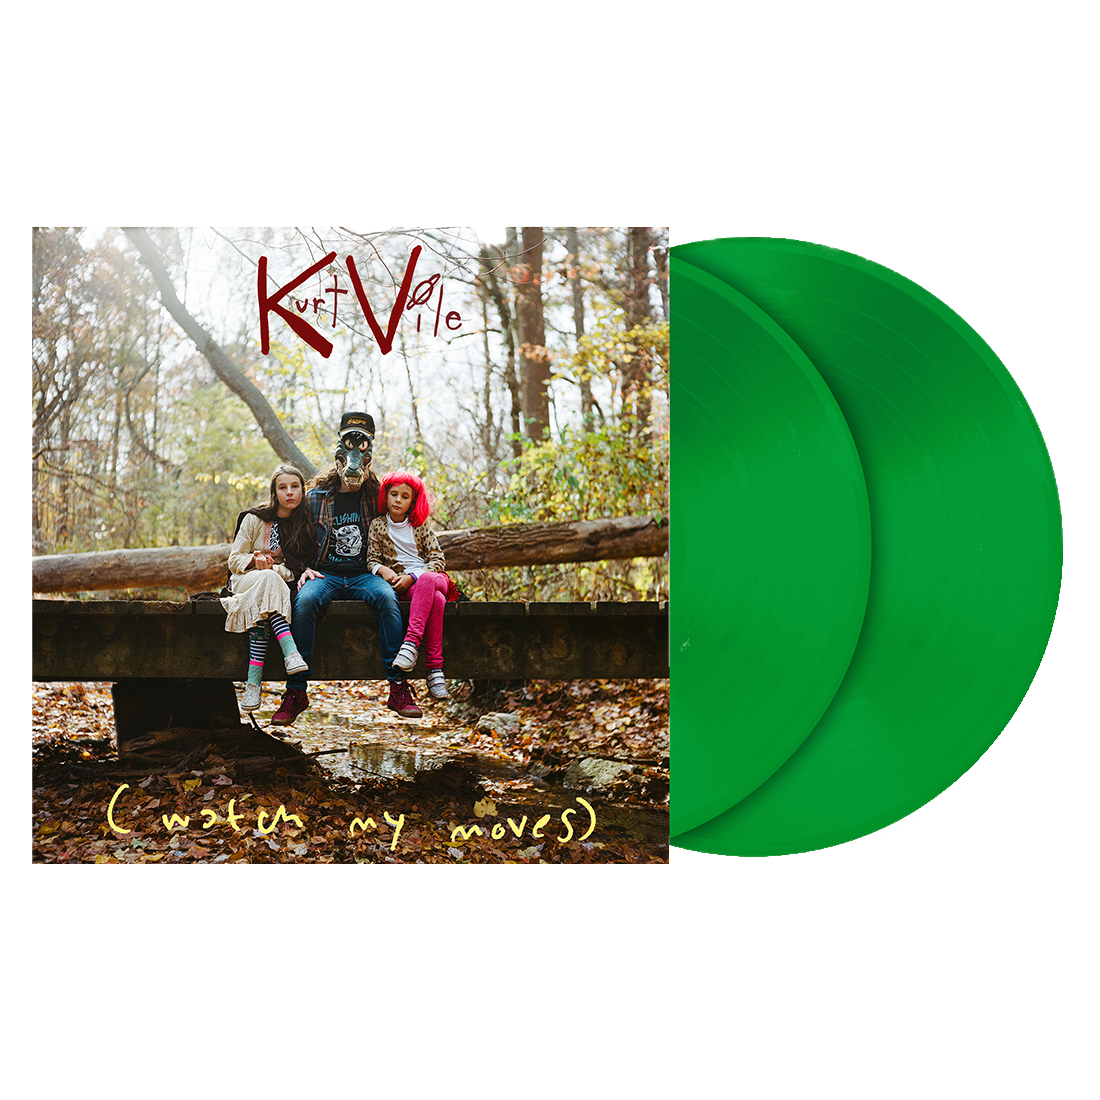 Kurt Vile - (Watch My Moves): Translucent Emerald Vinyl 2LP